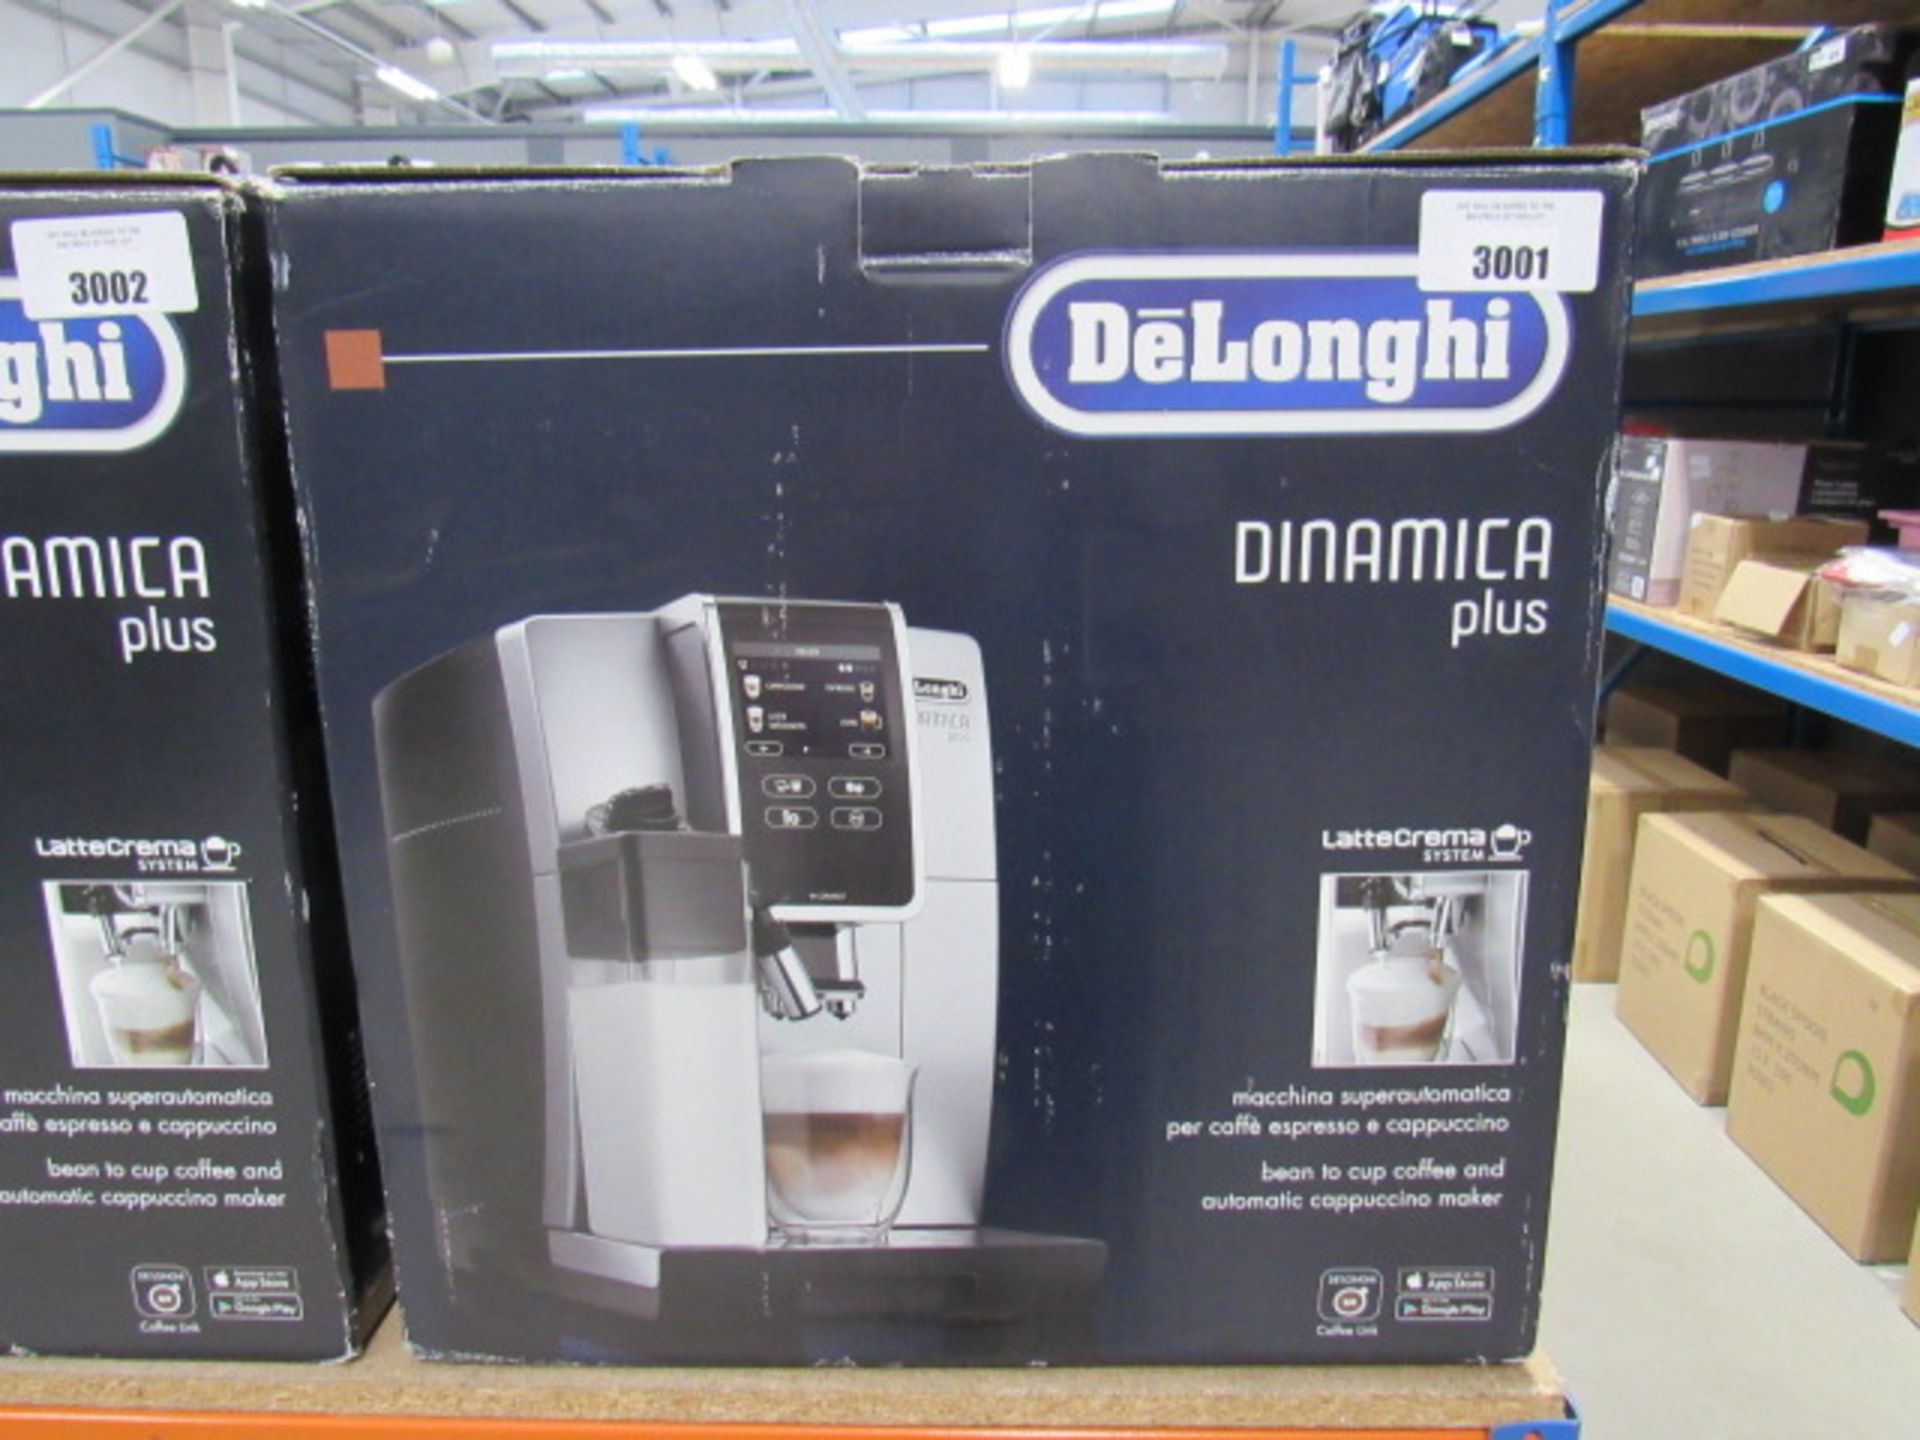 Boxed Delonghi Dinamica Plus latte creamer system